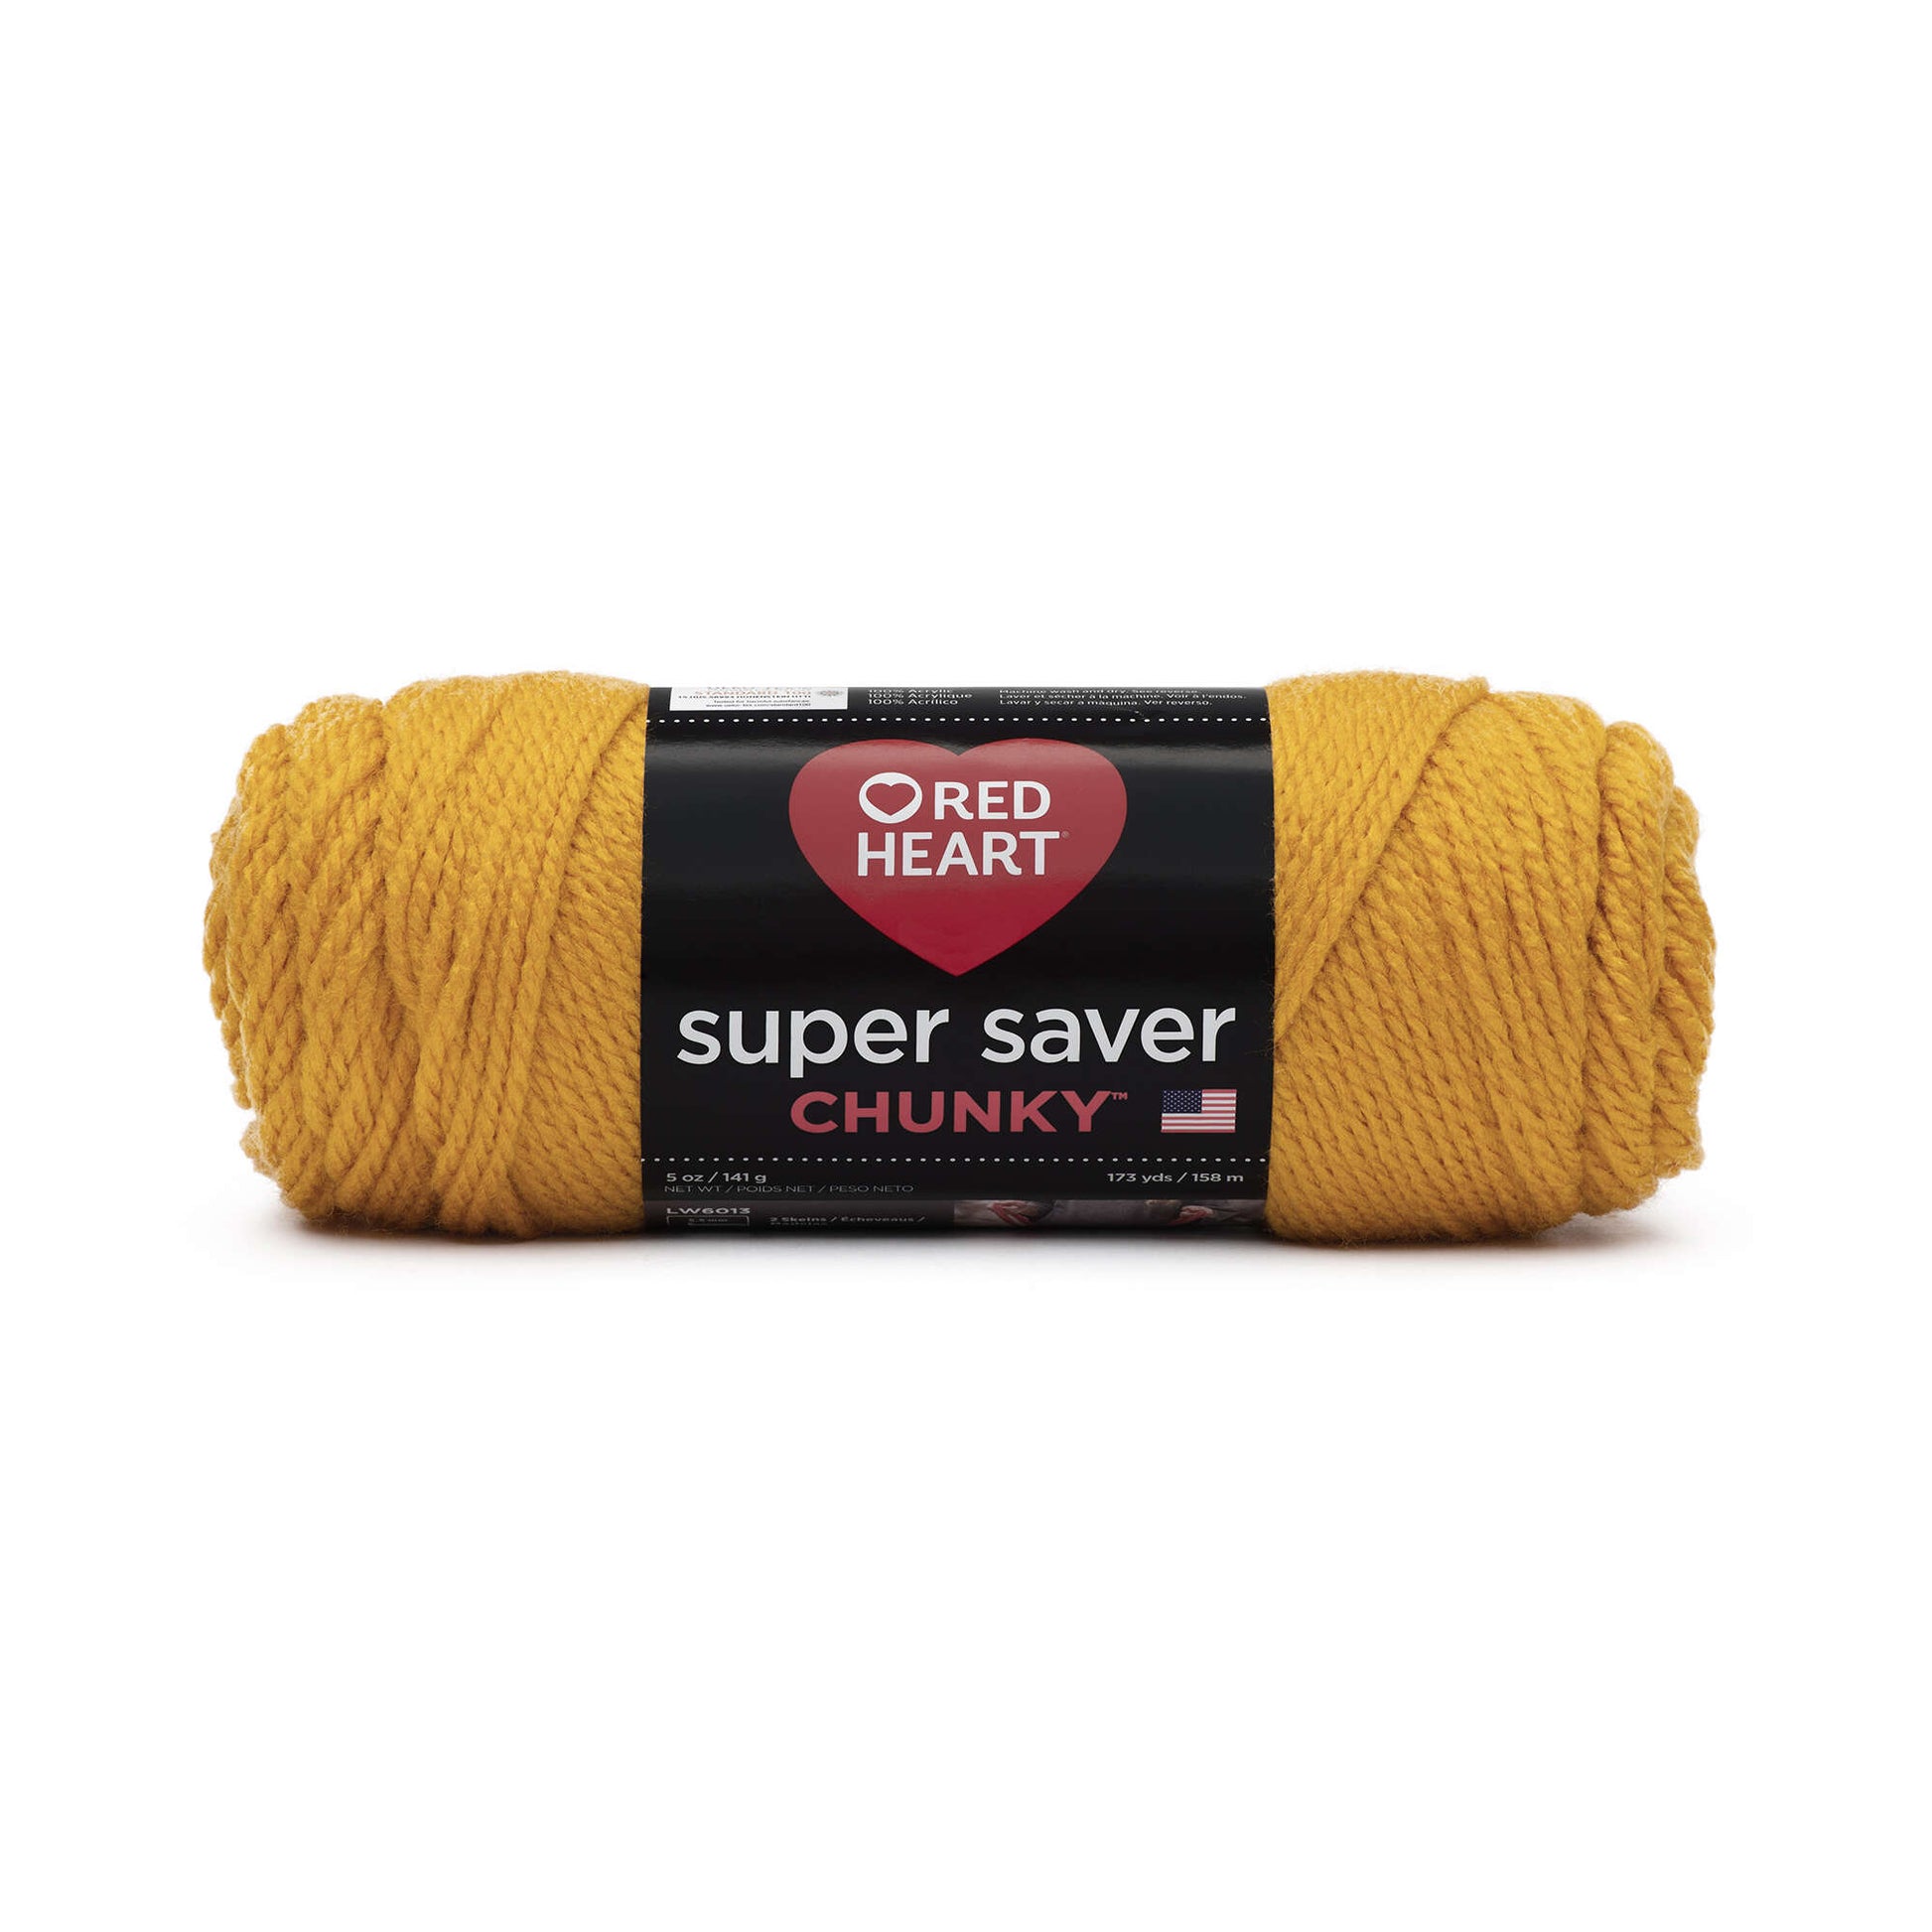 Red Heart Super Saver Chunky Yarn - Clearance shades Goldenrod